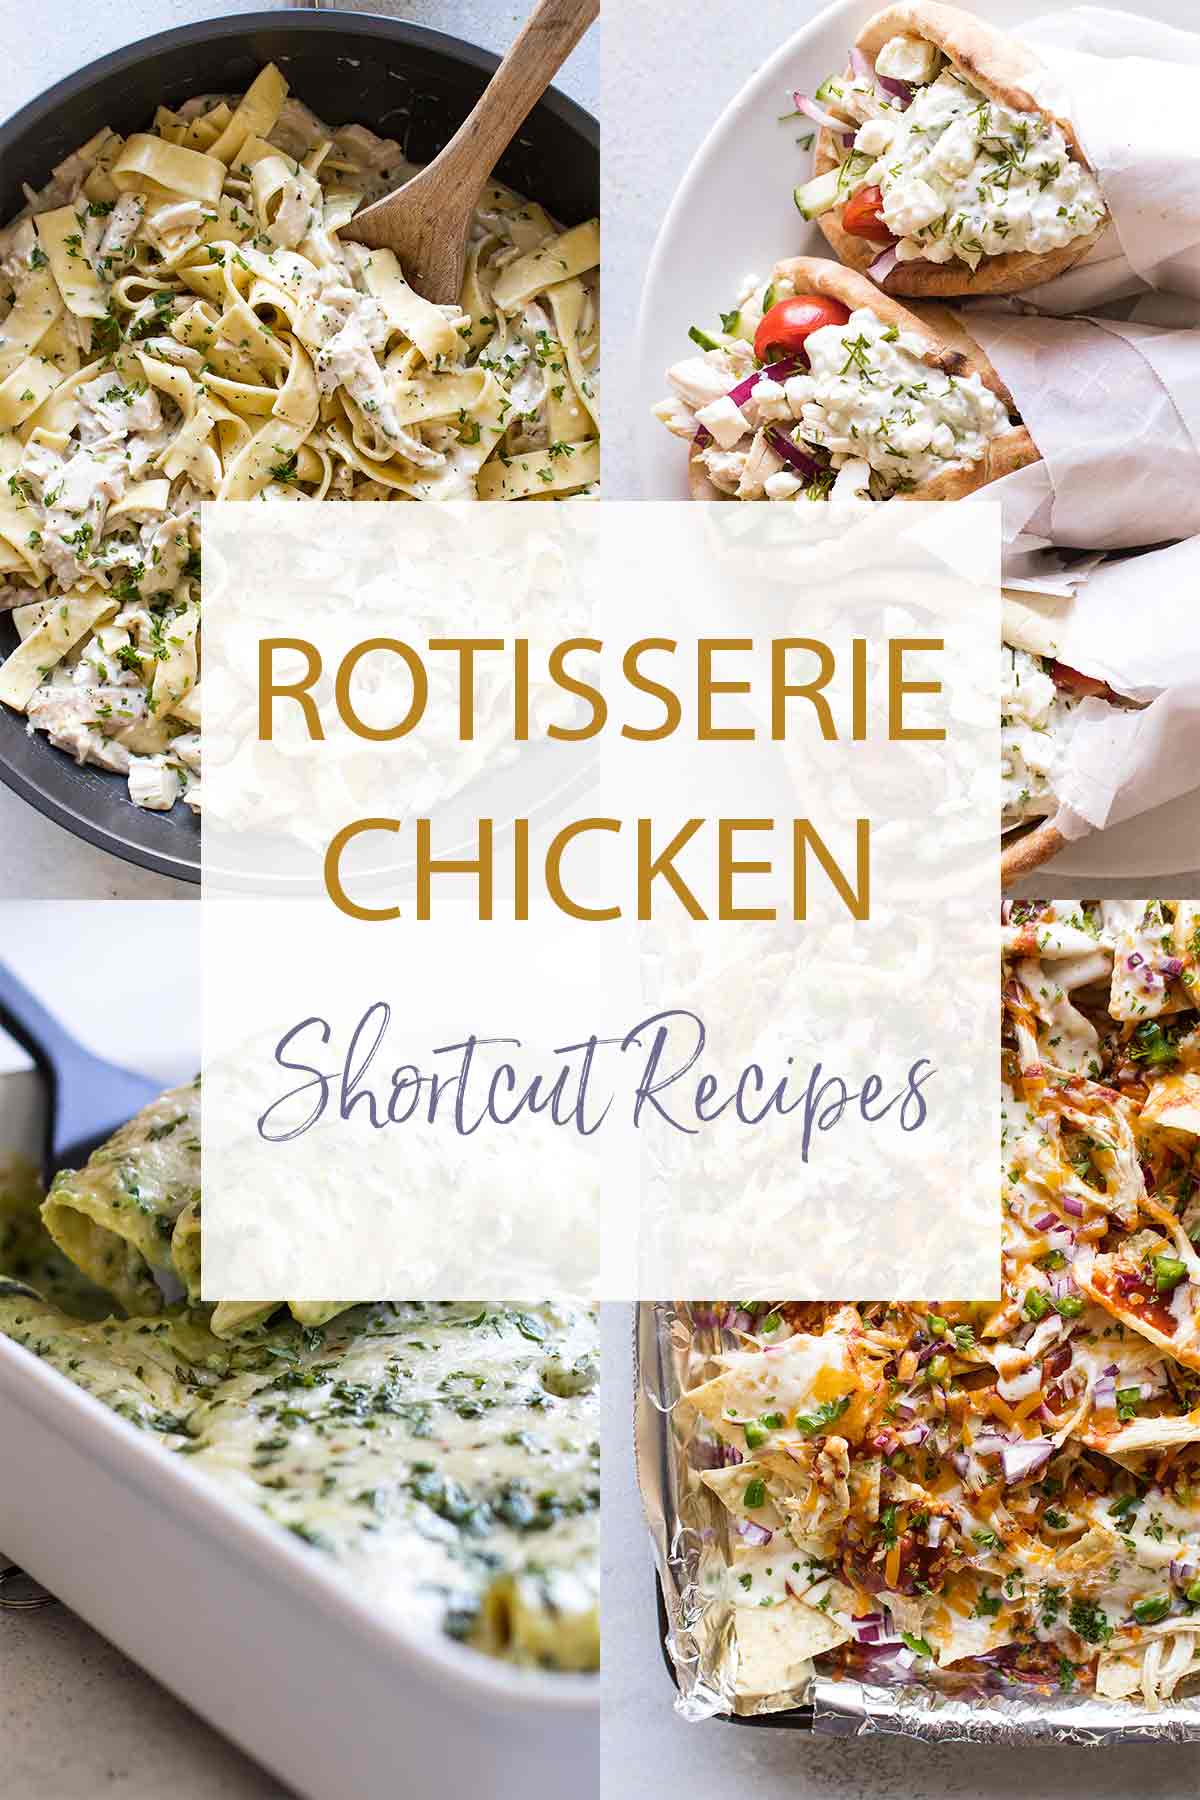 Recipes for Leftover Rotisserie Chicken